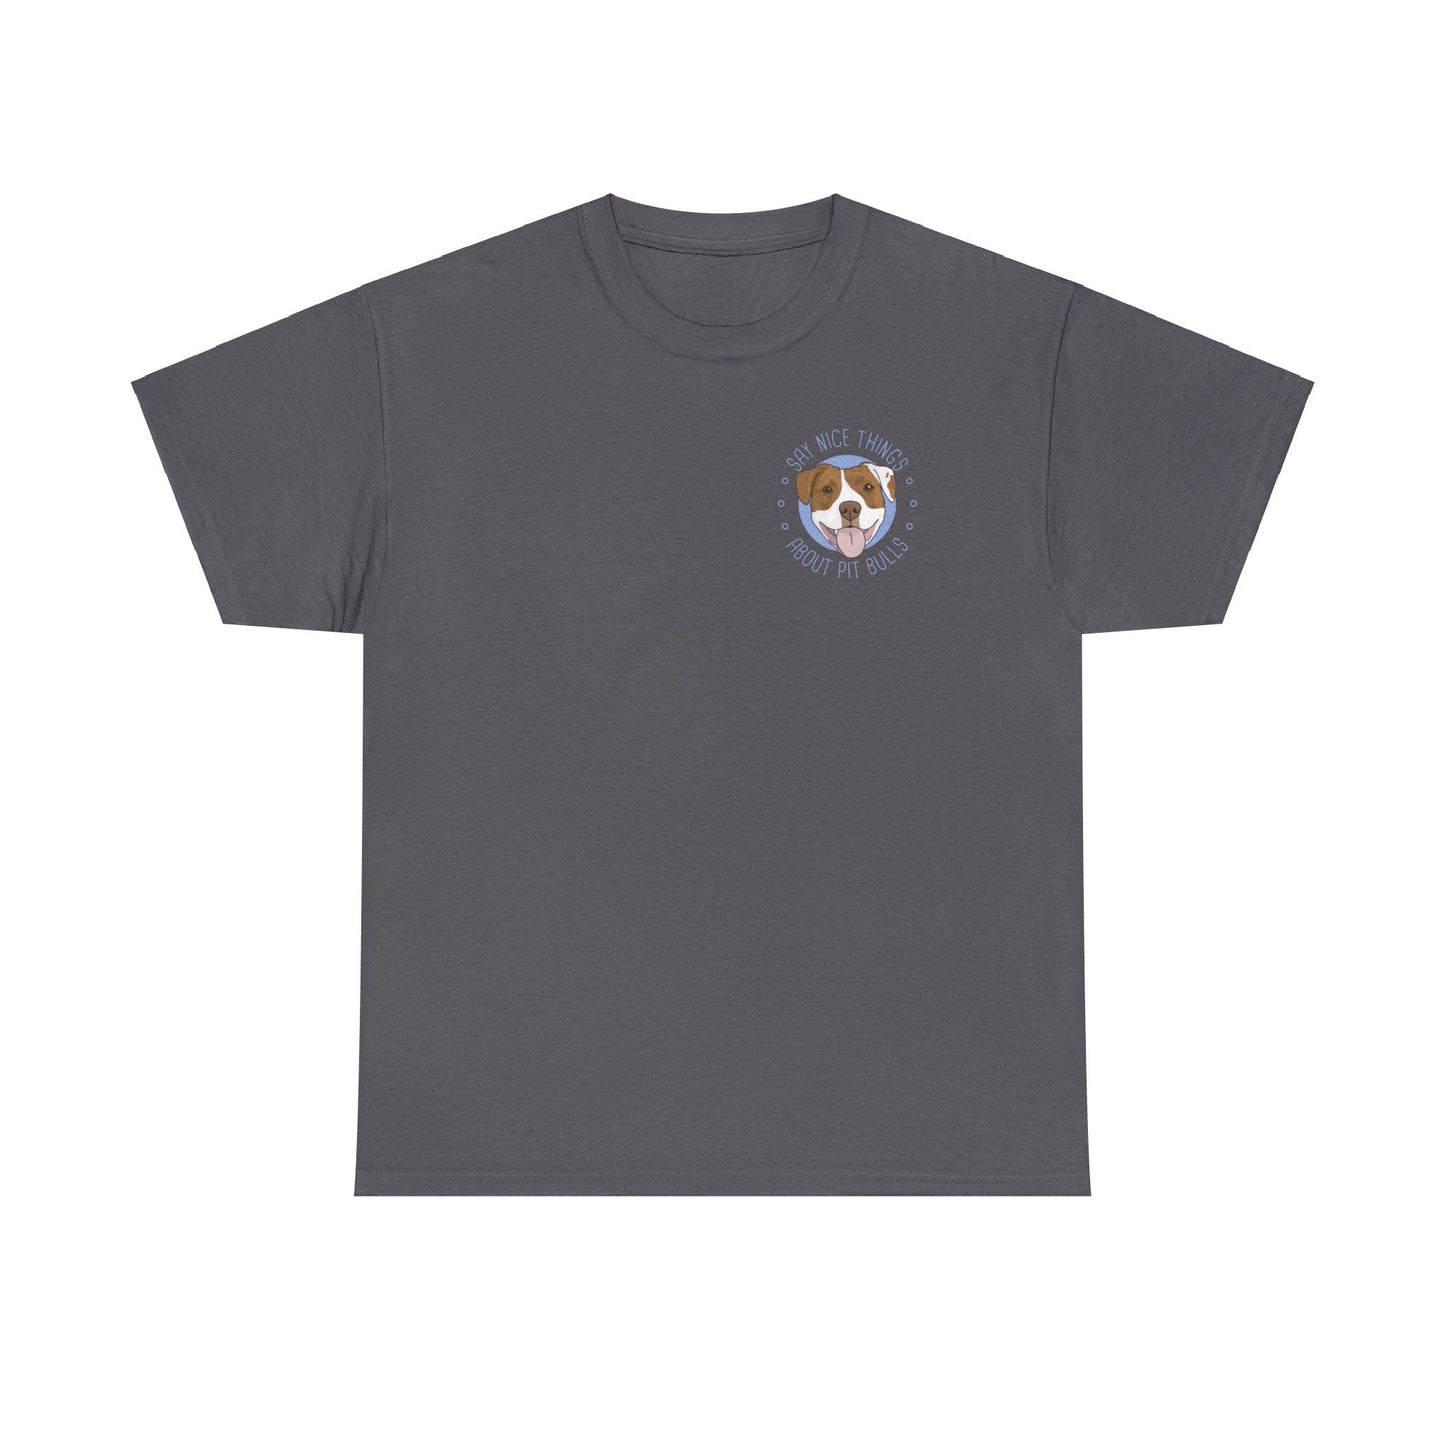 Say Nice Things About Pit Bulls | Pocket Print | T-shirt - Detezi Designs-13795722374473248470